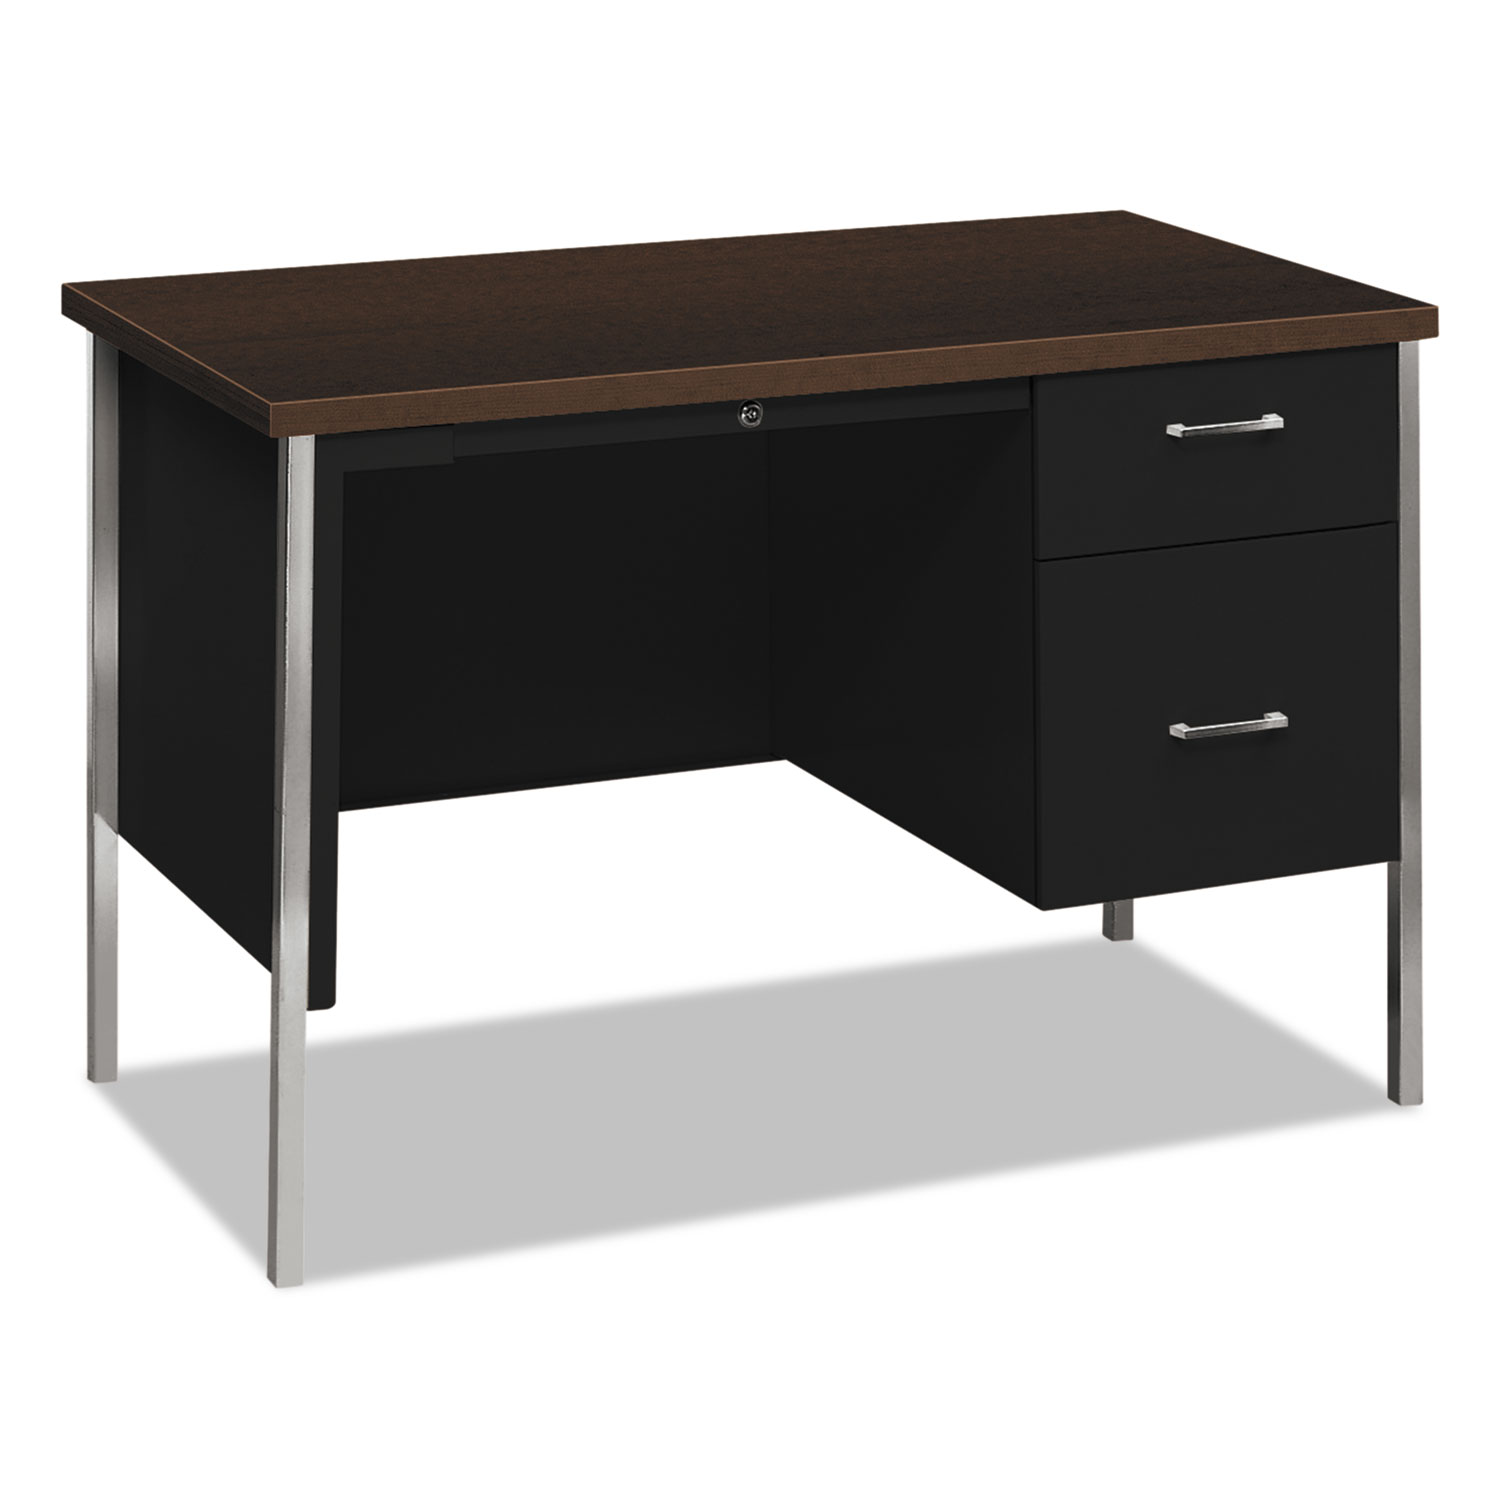 34000 Series Right Pedestal Desk, 45 1/4w x 24d x 29 1/2h, Mocha/Black